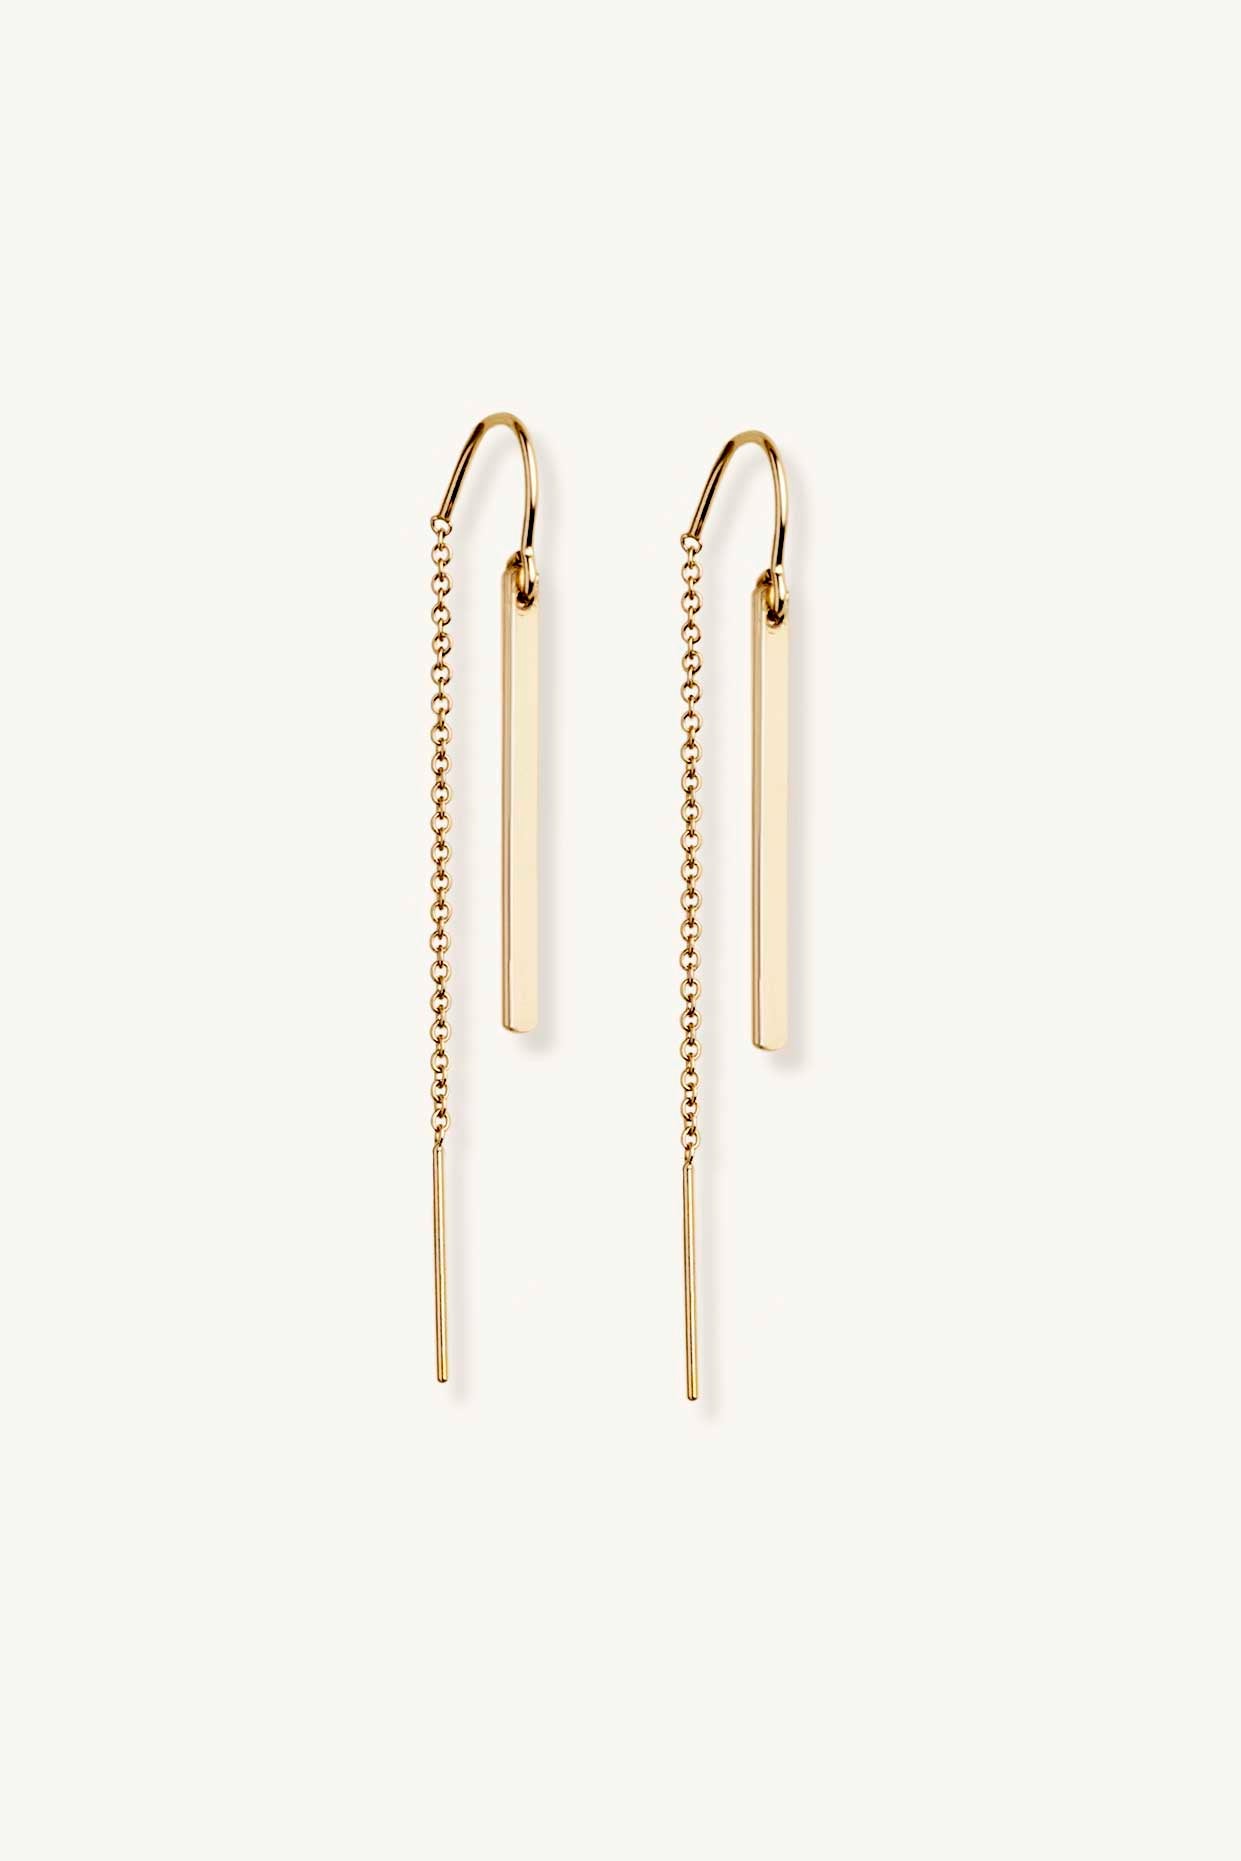 Gold bar minimalist threader earrings